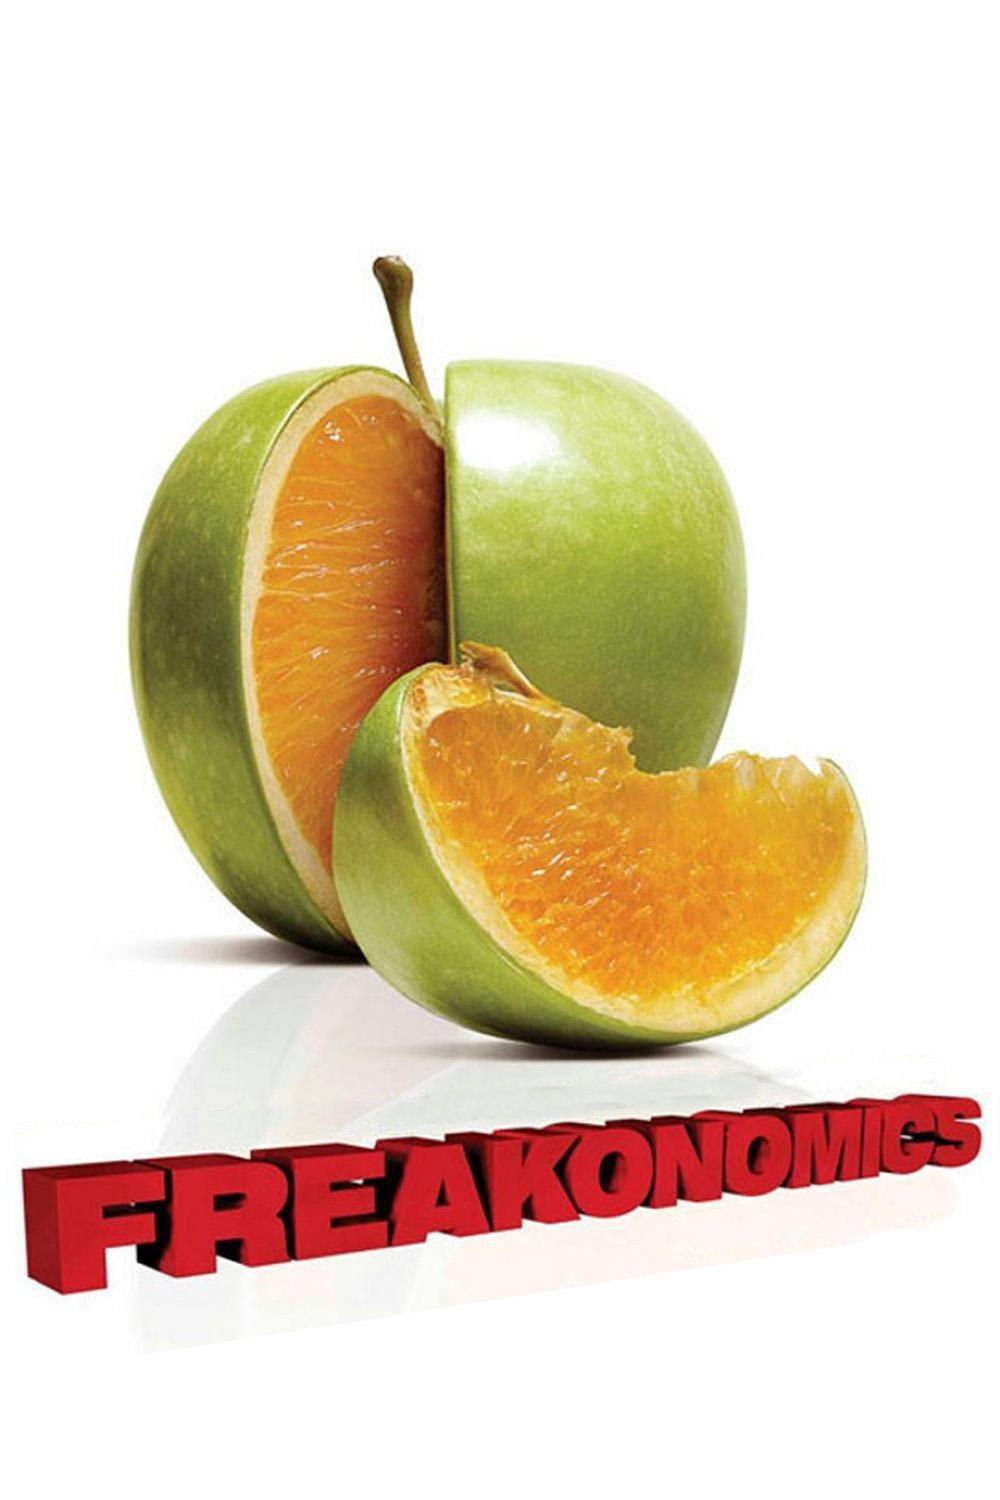 Poster for the movie "Freakonomics"